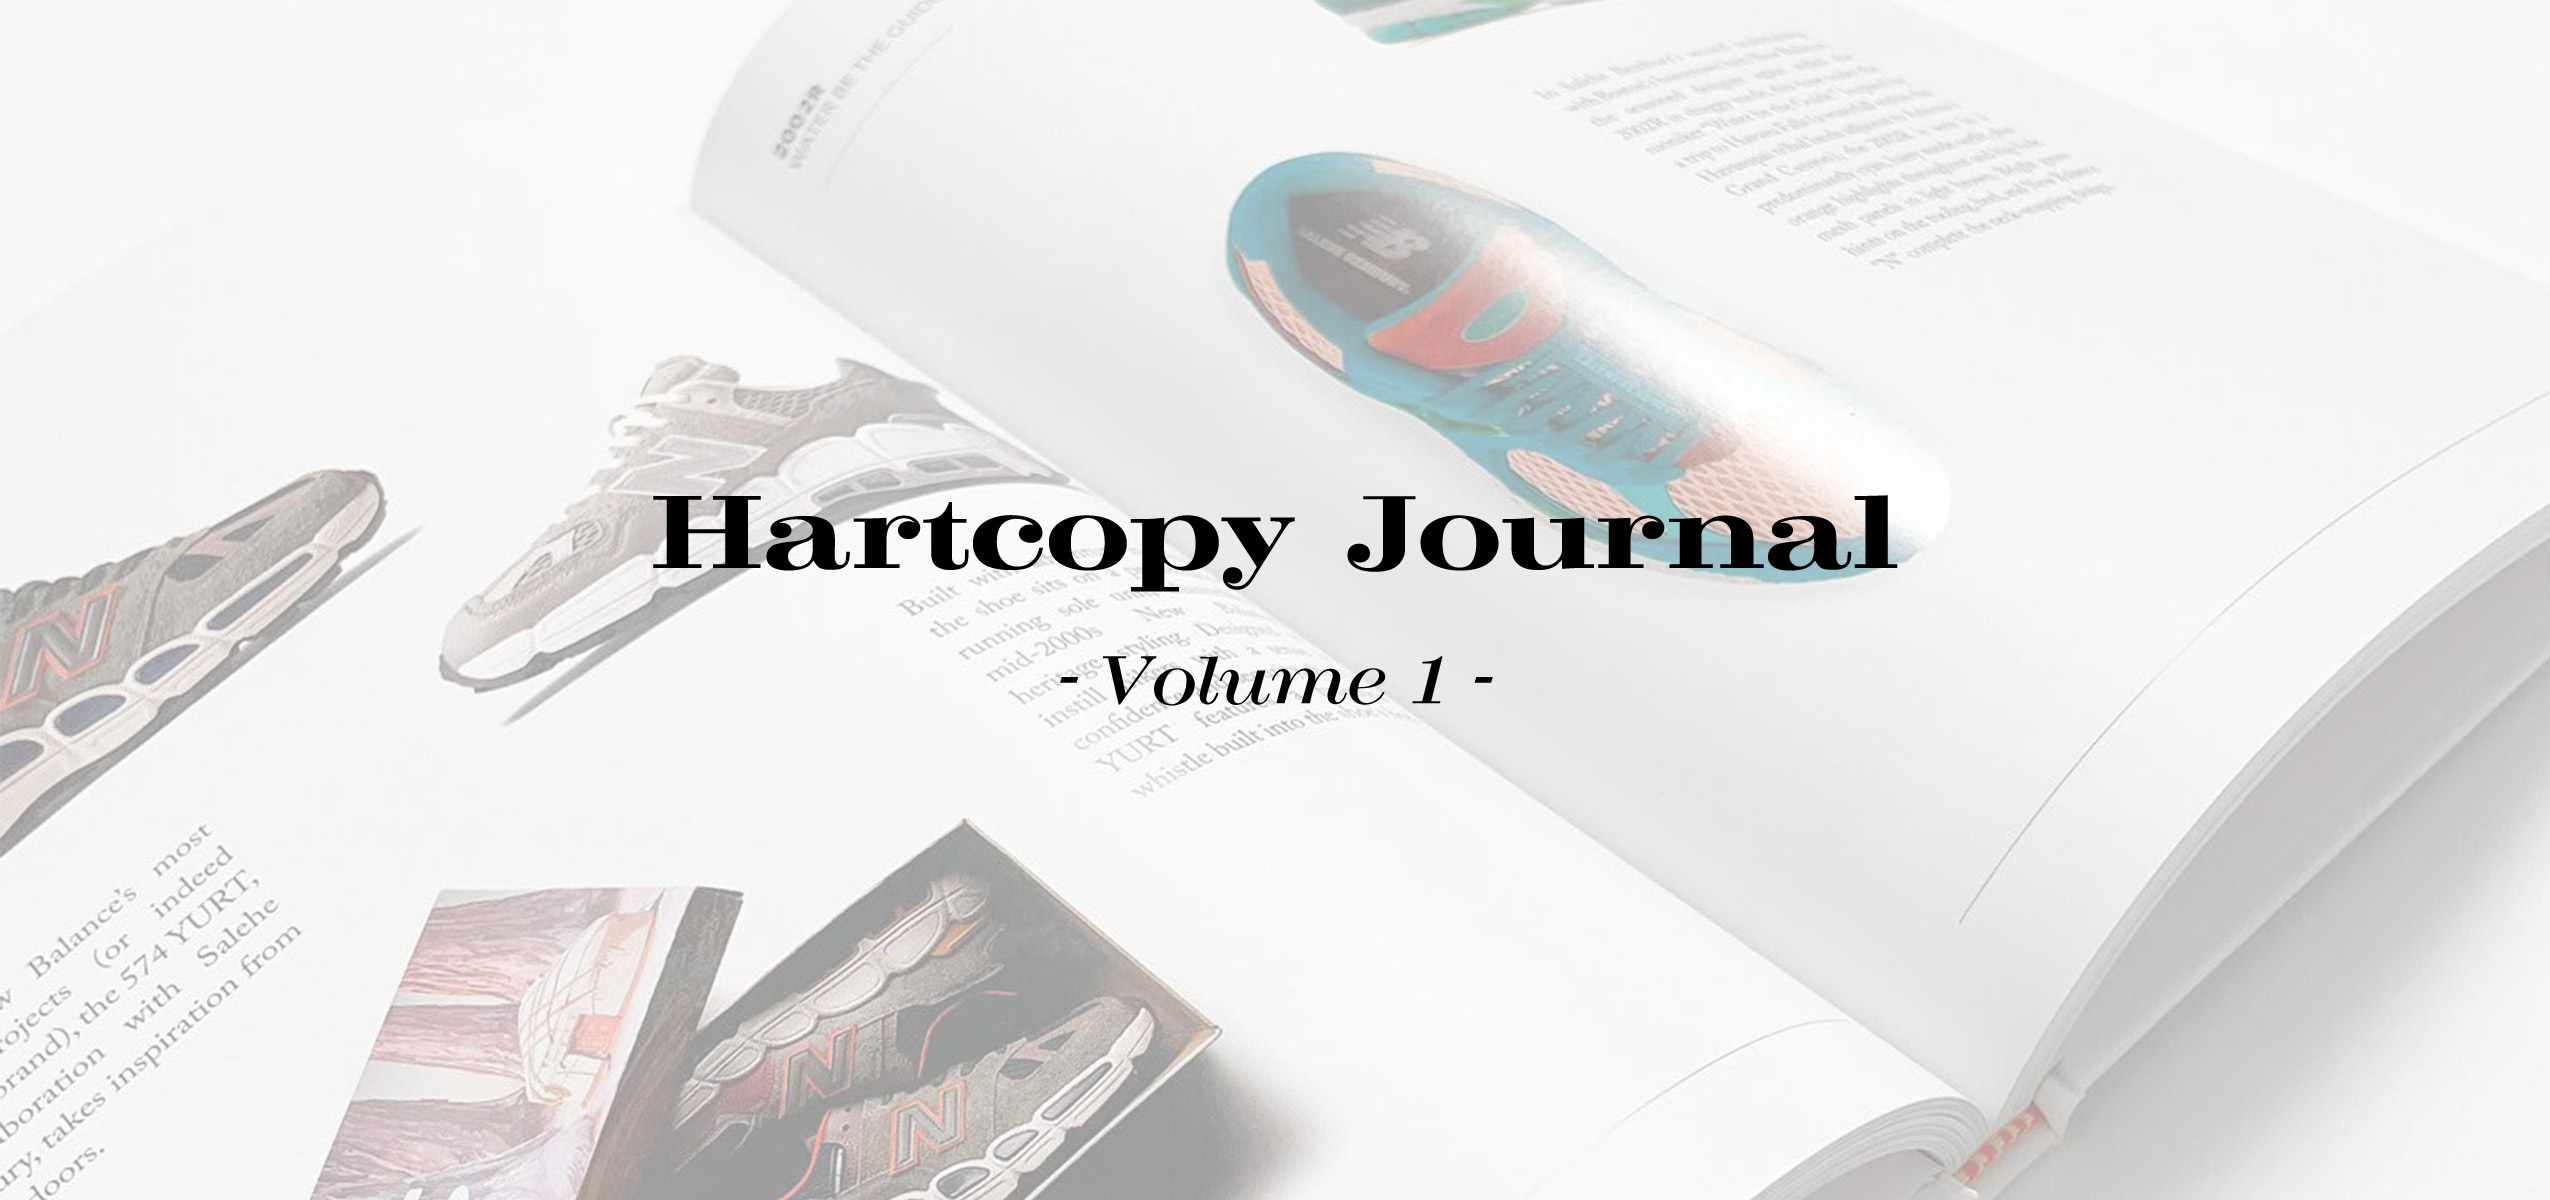 "HARTCOPY VOLUME 1"